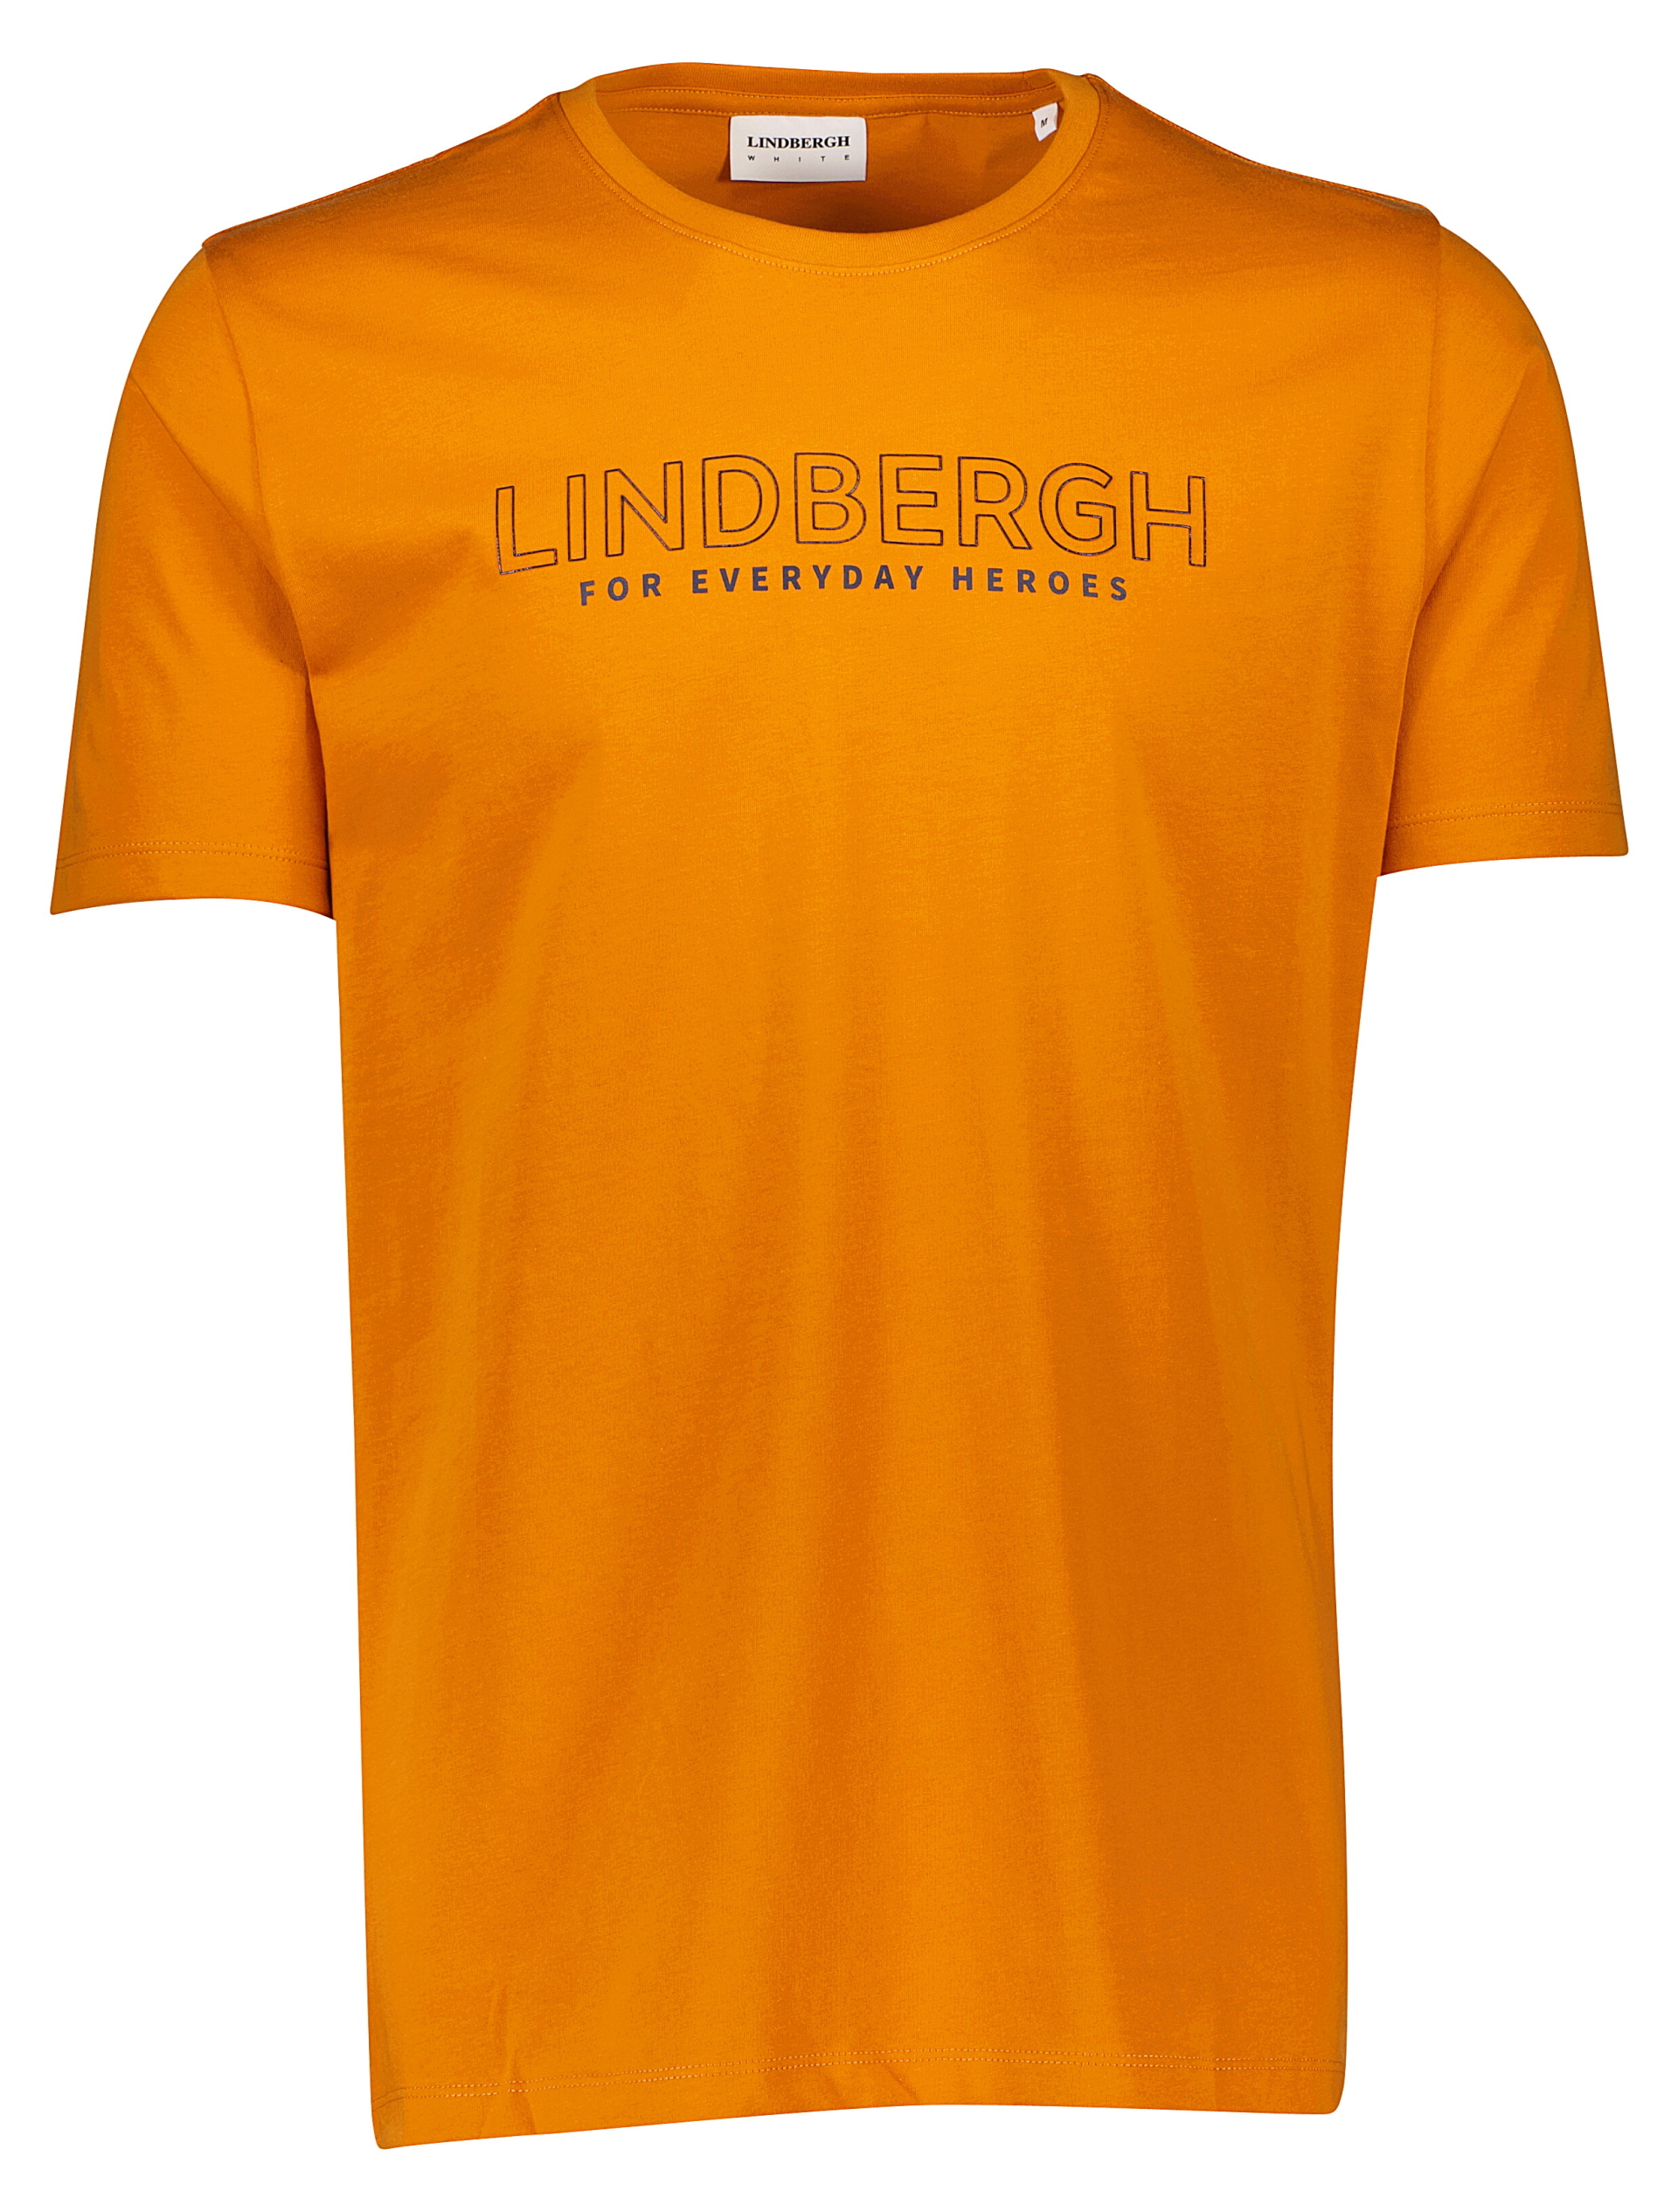 Lindbergh T-shirt orange / lt orange